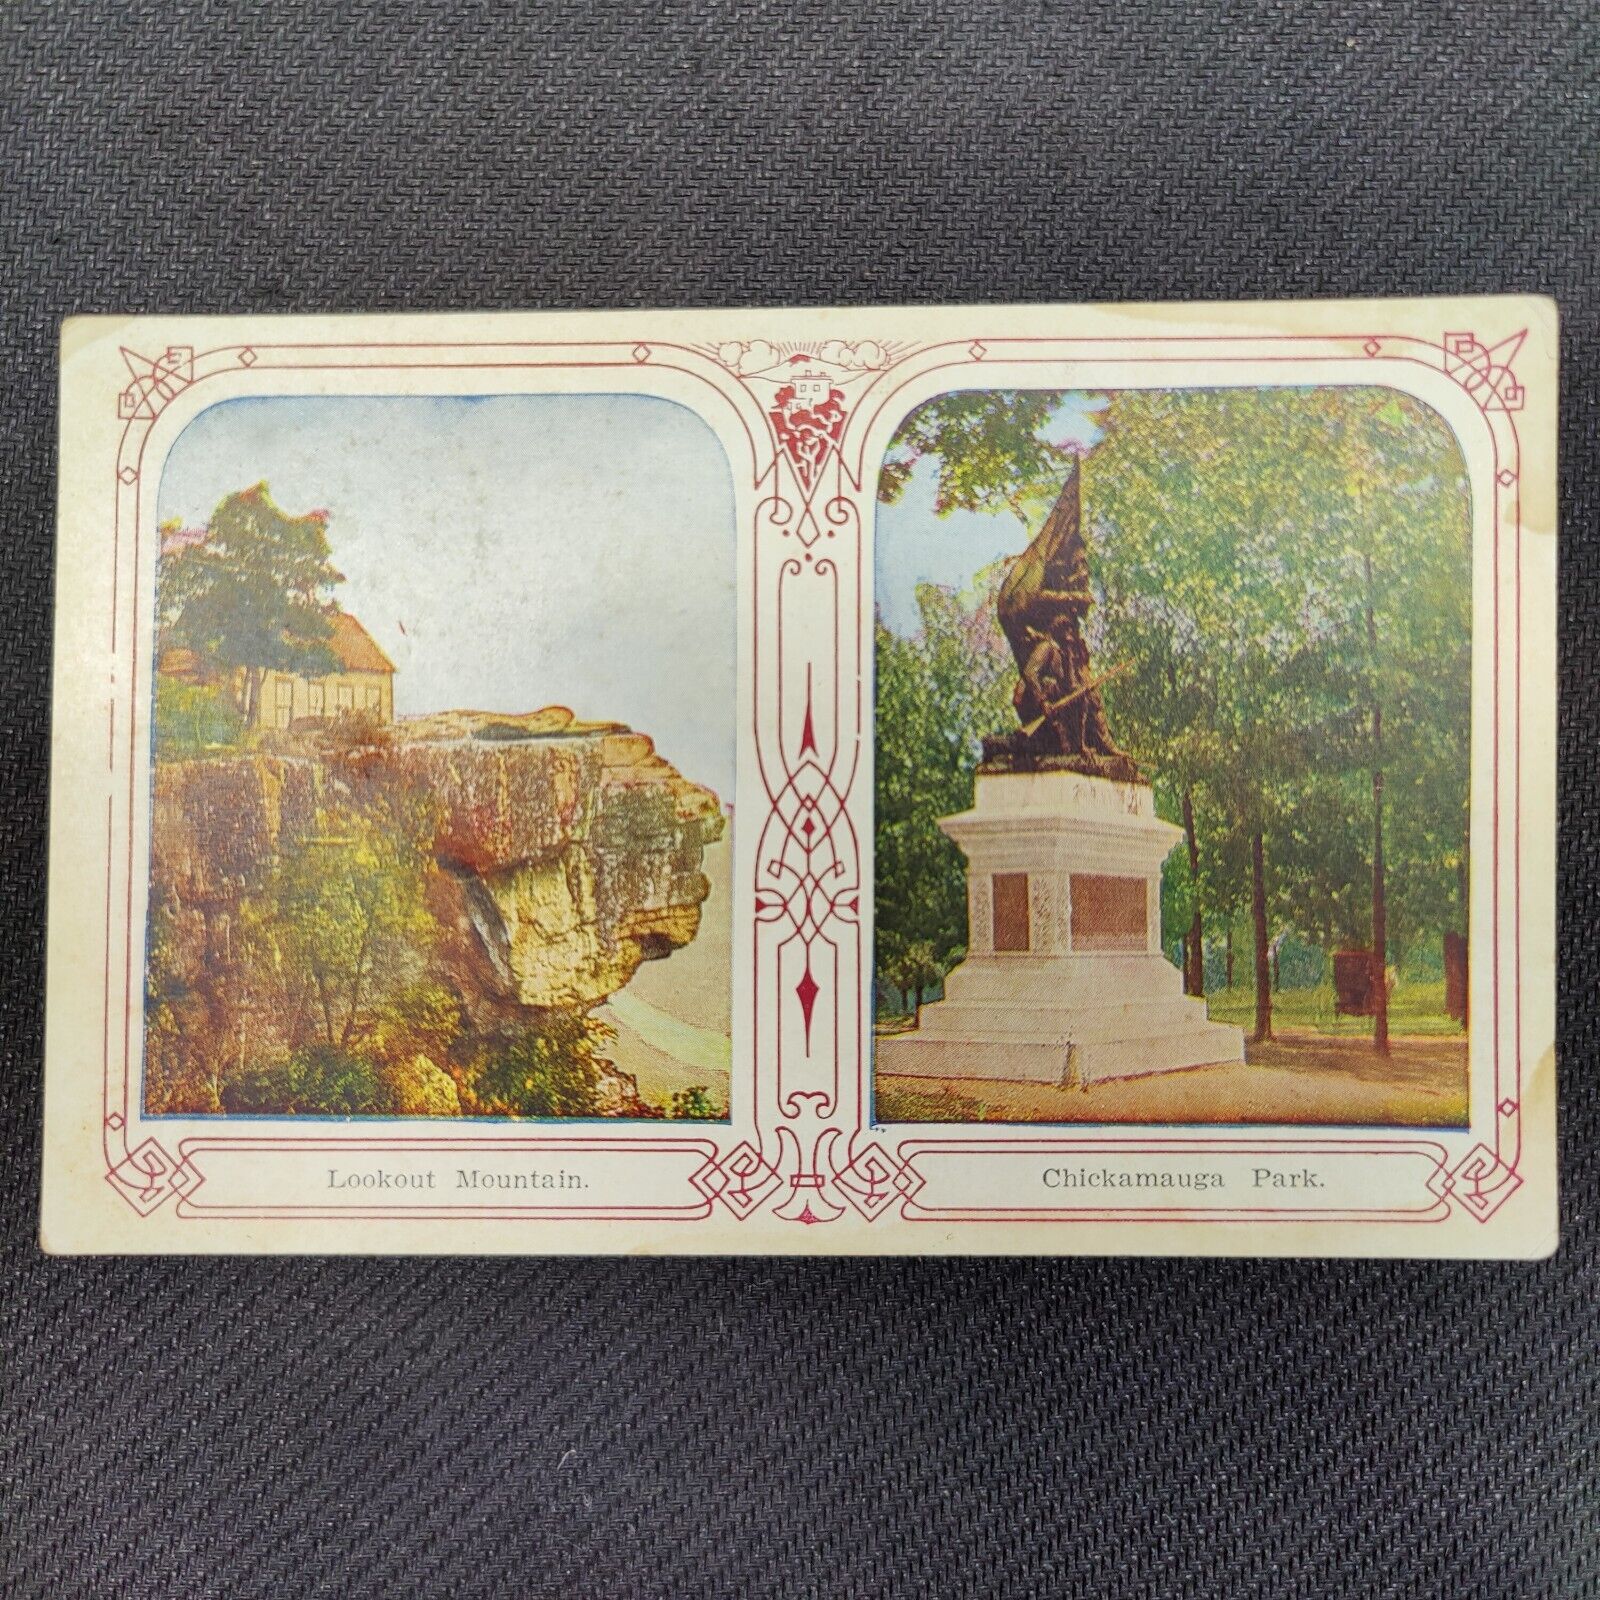 RARE Antique c. 1920s World Postcard GEORGIA LOOKOUT MOUNTAIN + CHICKAMAUGA PARK